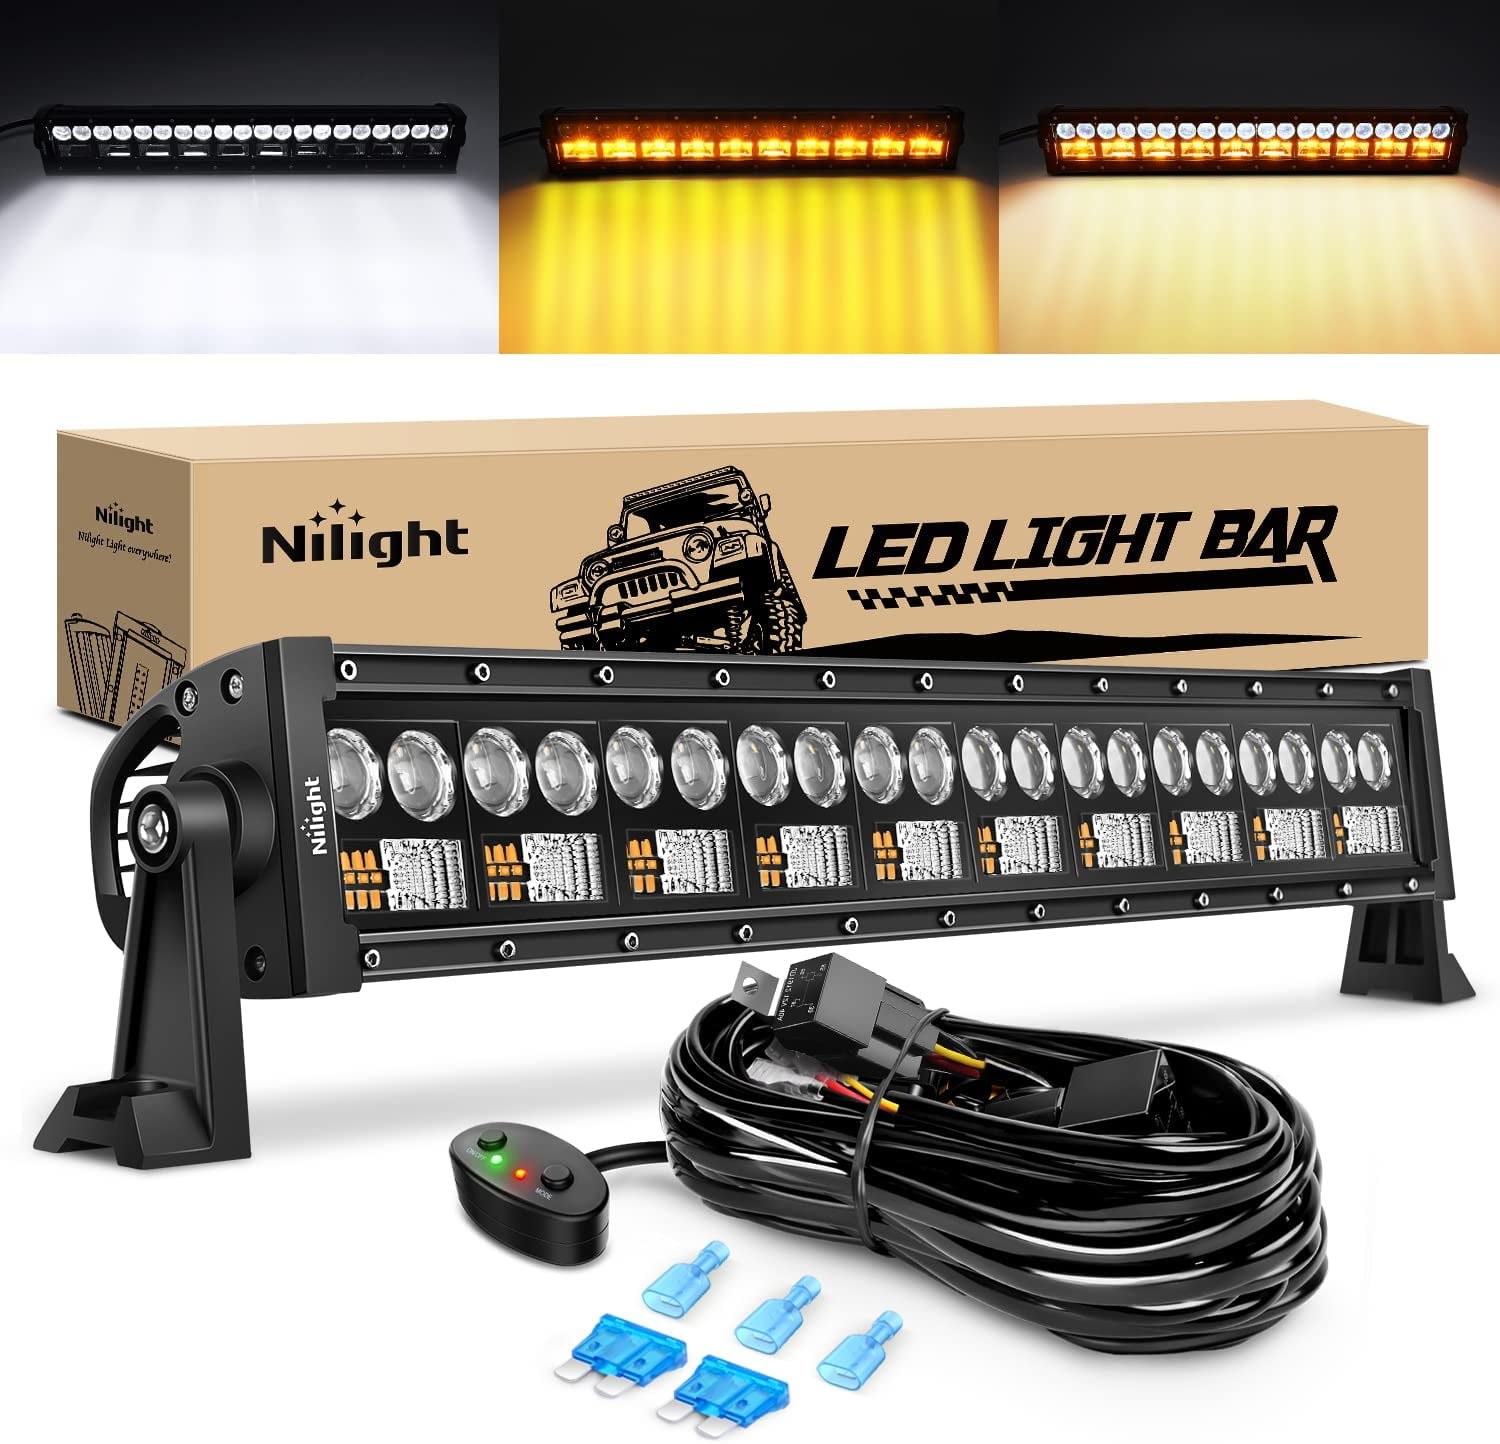 Nilight LED Light Bar 7D 22Inch 150W Spot Flood Combo Beam Amber